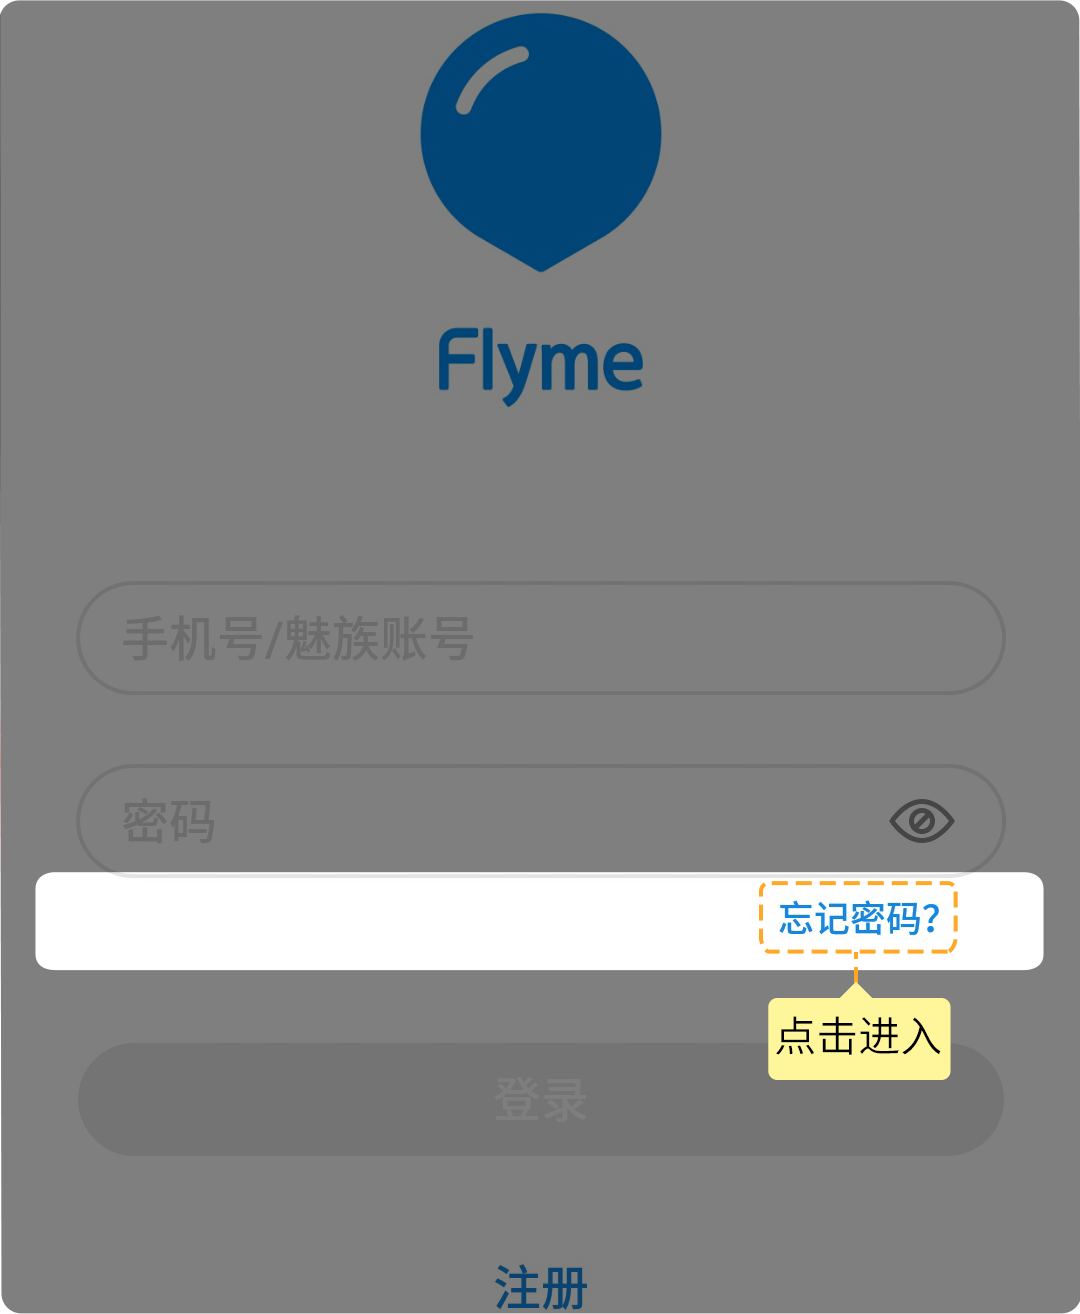 登录 Flyme 账号1